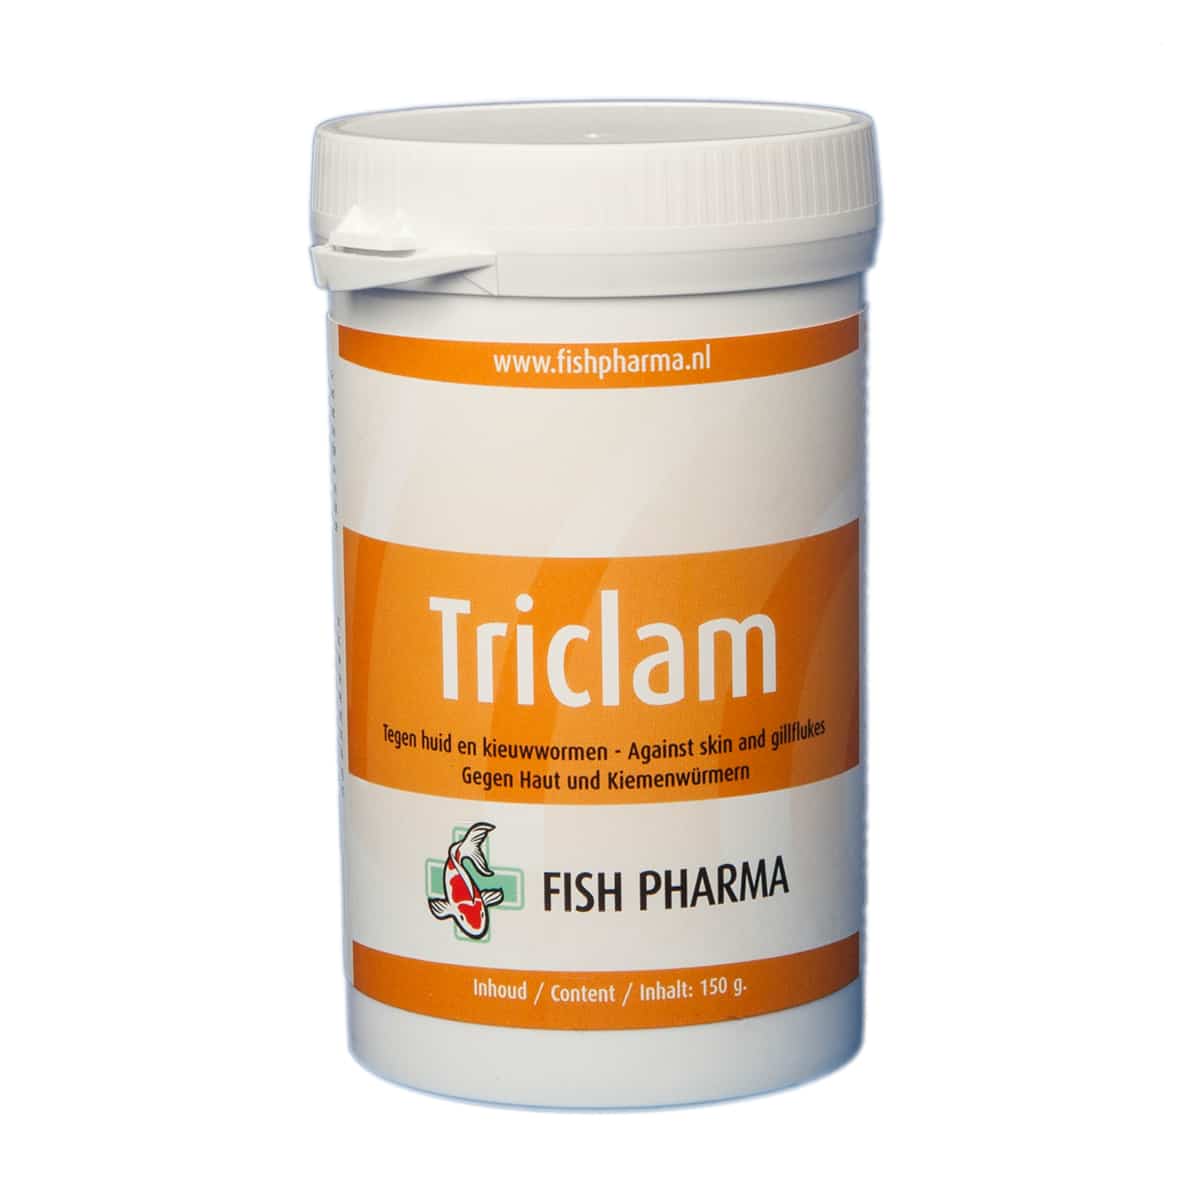 Fish-Pharma-Triclam-bestrijding-huidwormen-kieuwwormen-vissen